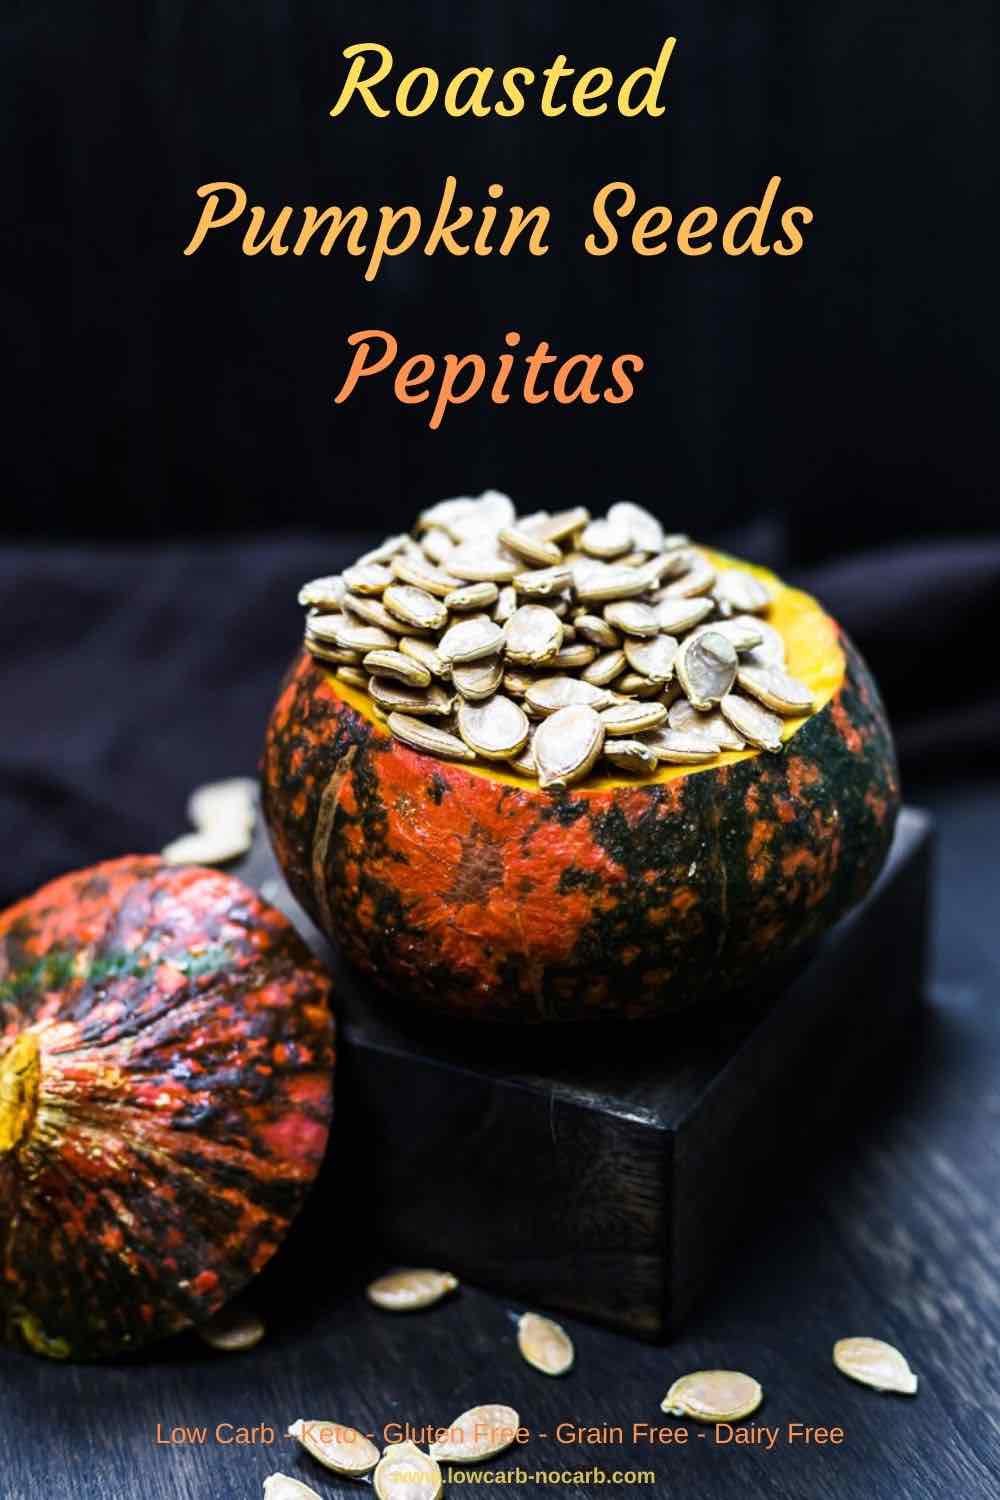 Roasted Pumpkin Seeds - Pepitas in a whole Pumpkin